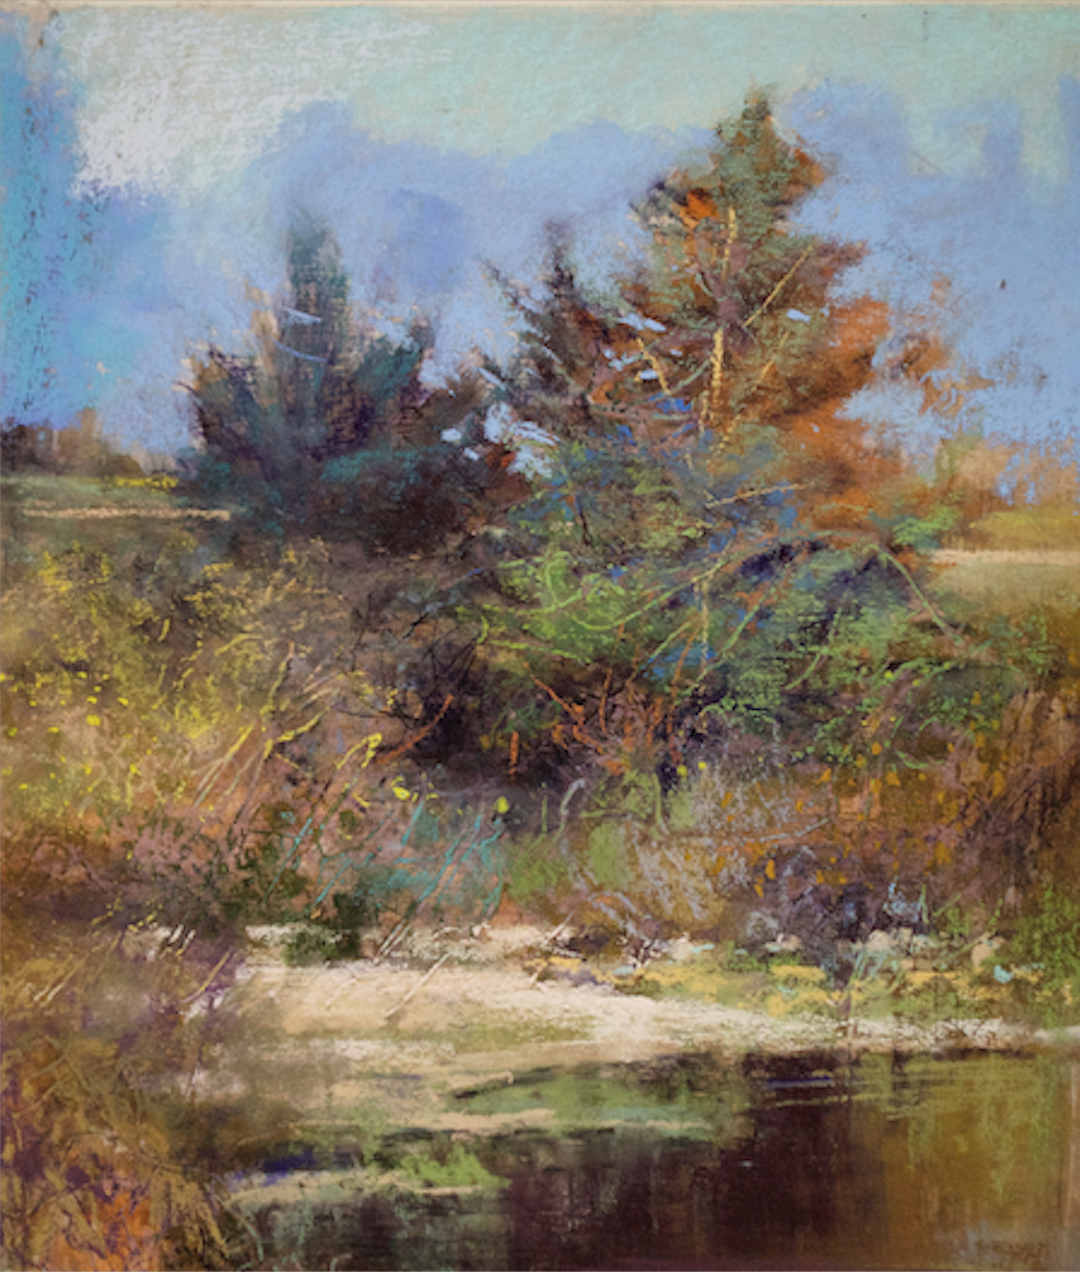 Tom Christopher, "Autumn on Ruby Creek," pastel